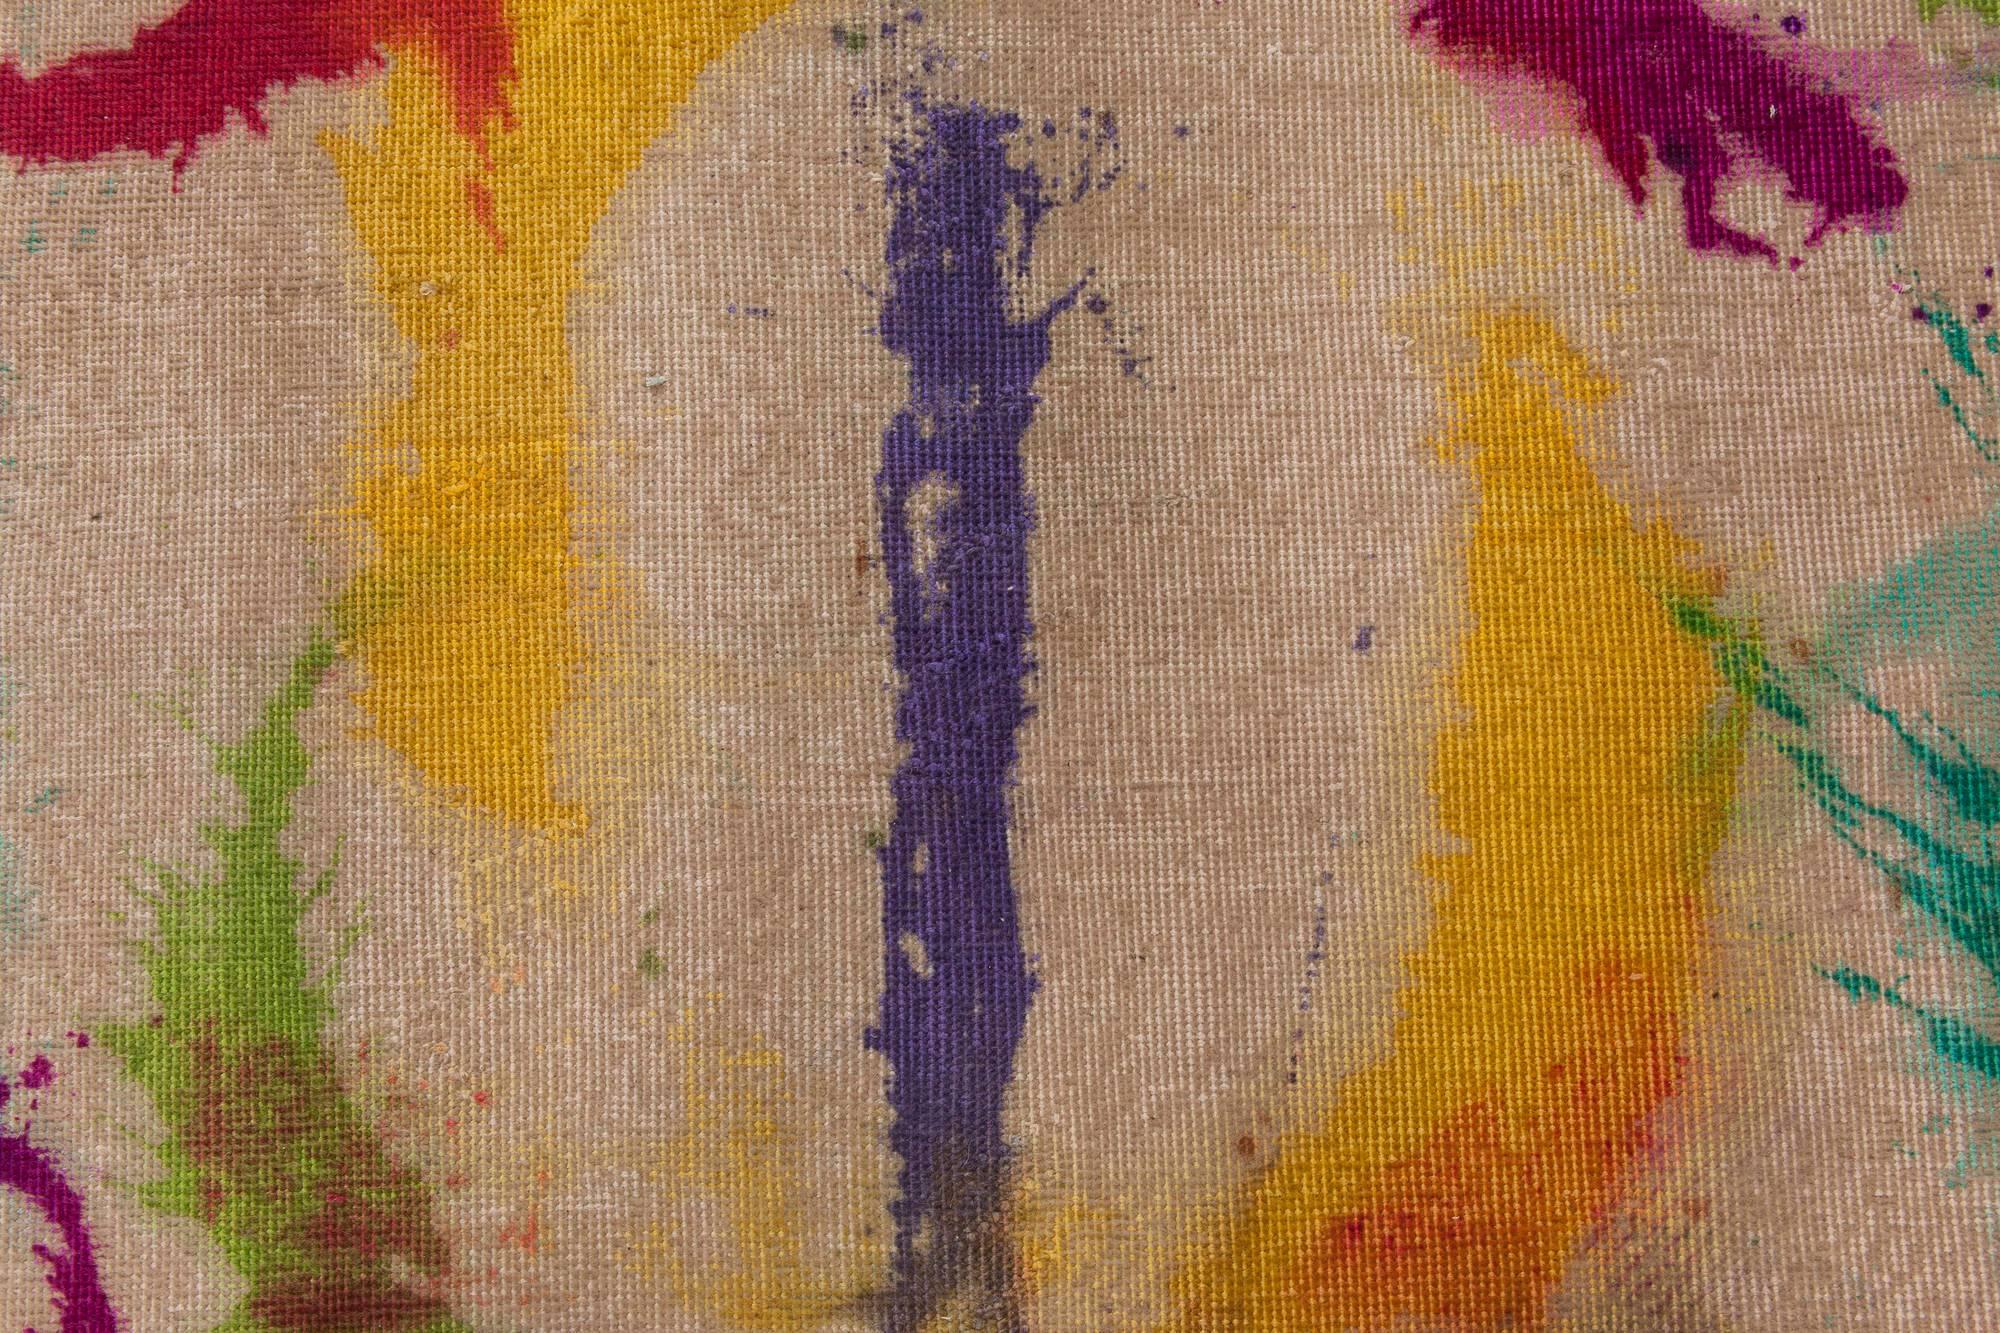 Contemporary abstract Daliesque handmade wool rug by Doris Leslie Blau
Size: 8'7